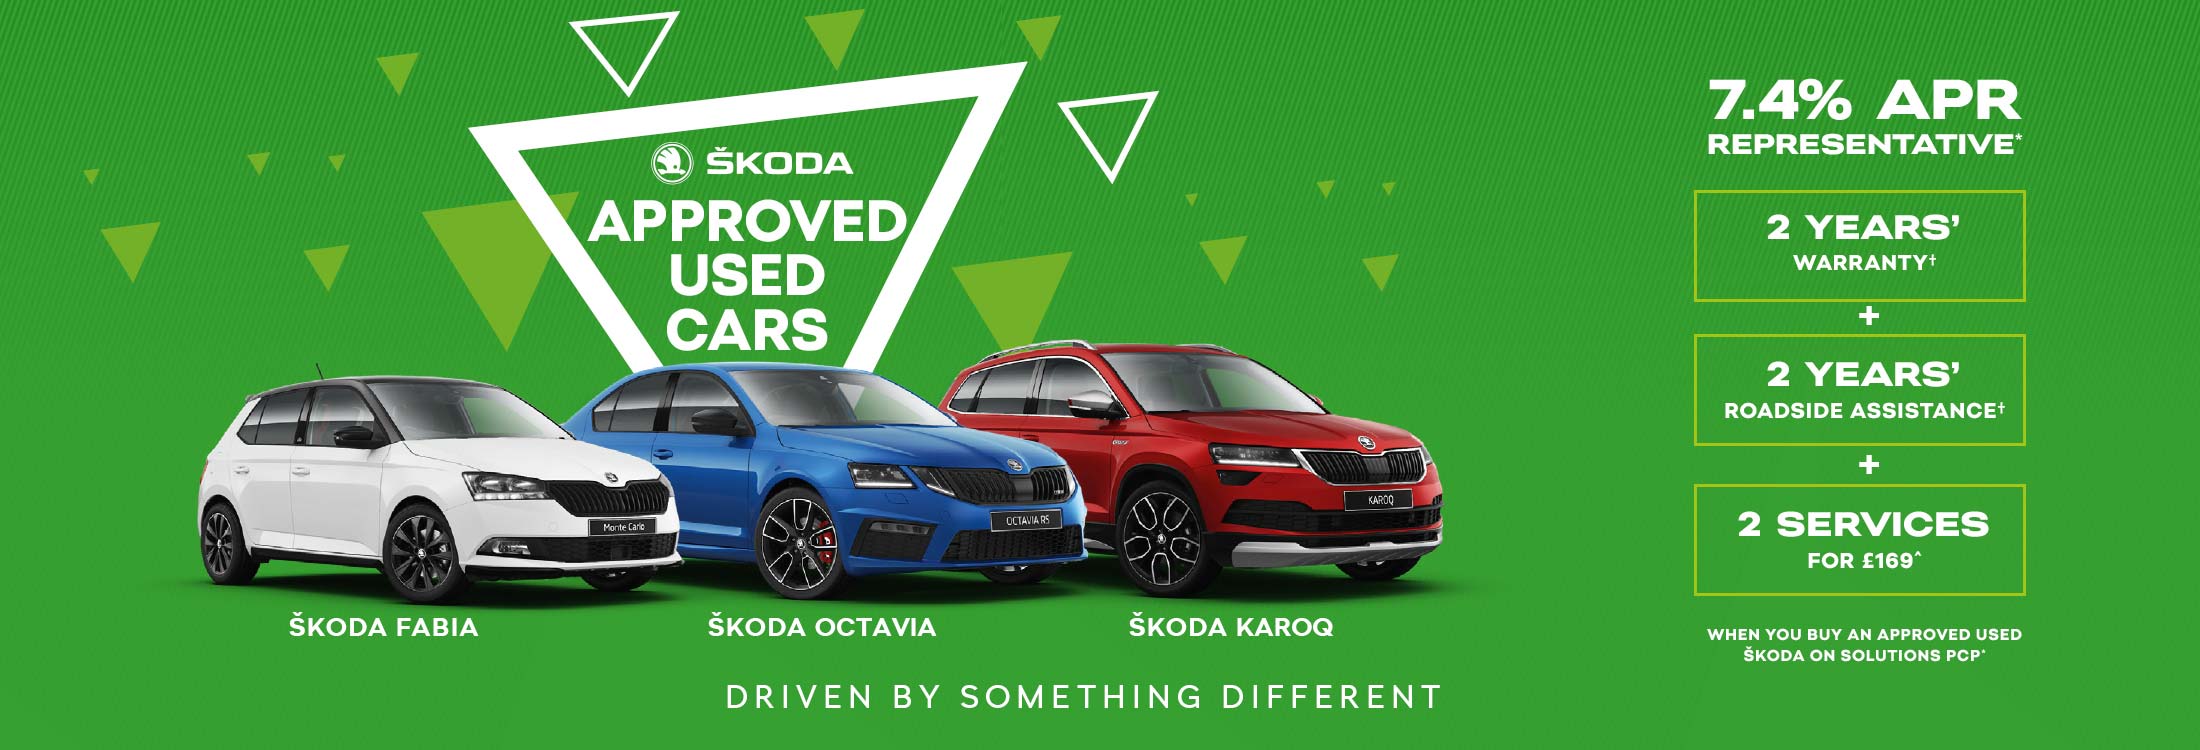 skoda-approved-used-cars